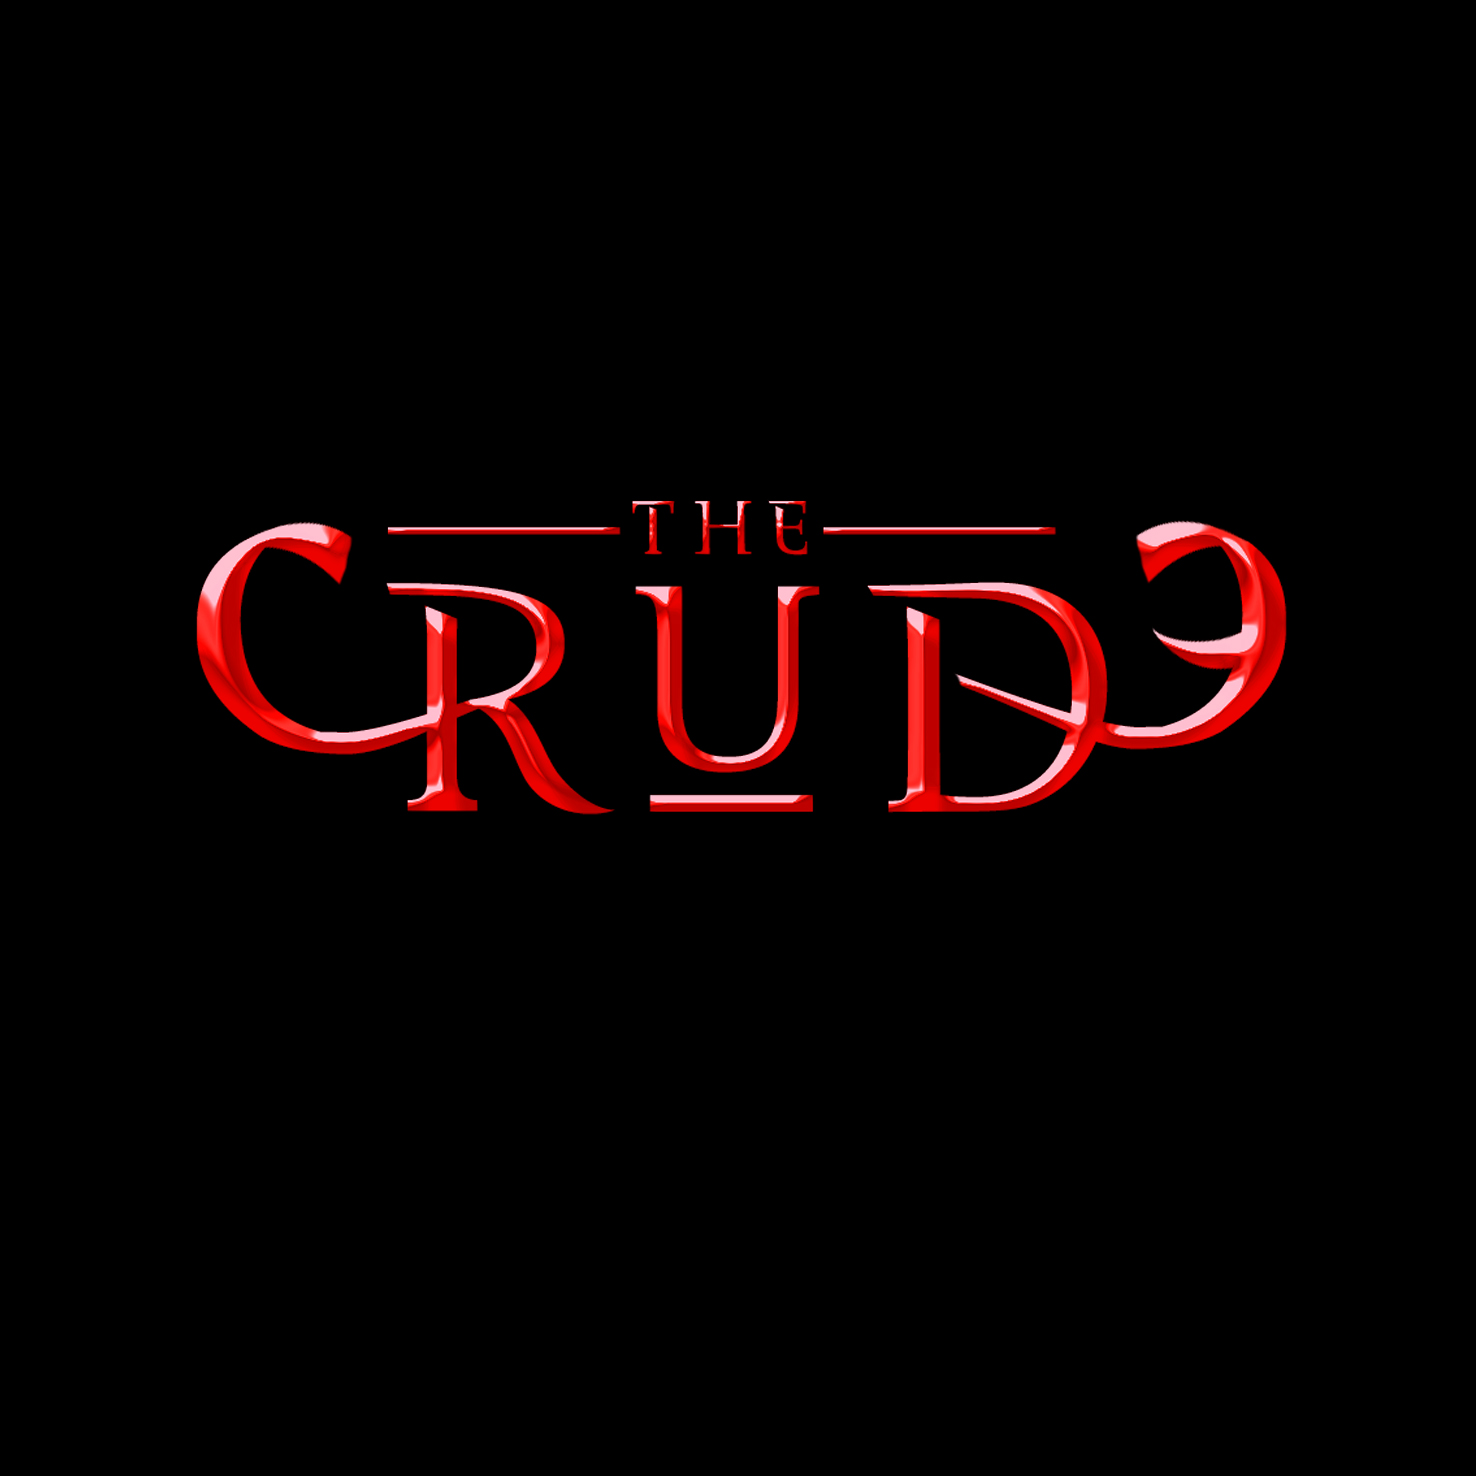 http://indiemusicpeople.com/uploads2/The_Crude_-_The_Crude_Logo.jpg